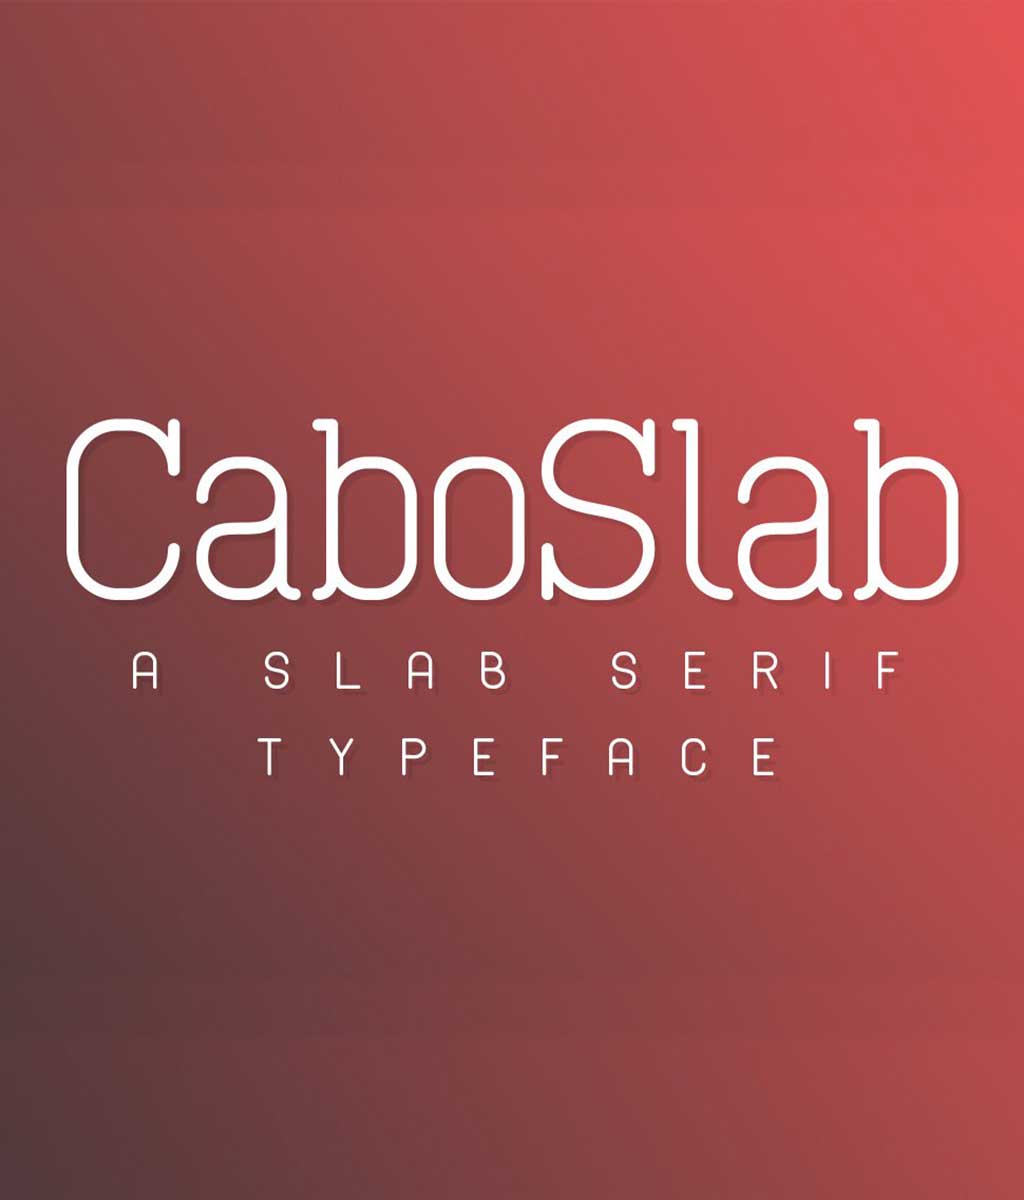 Cabo Slab Font Family